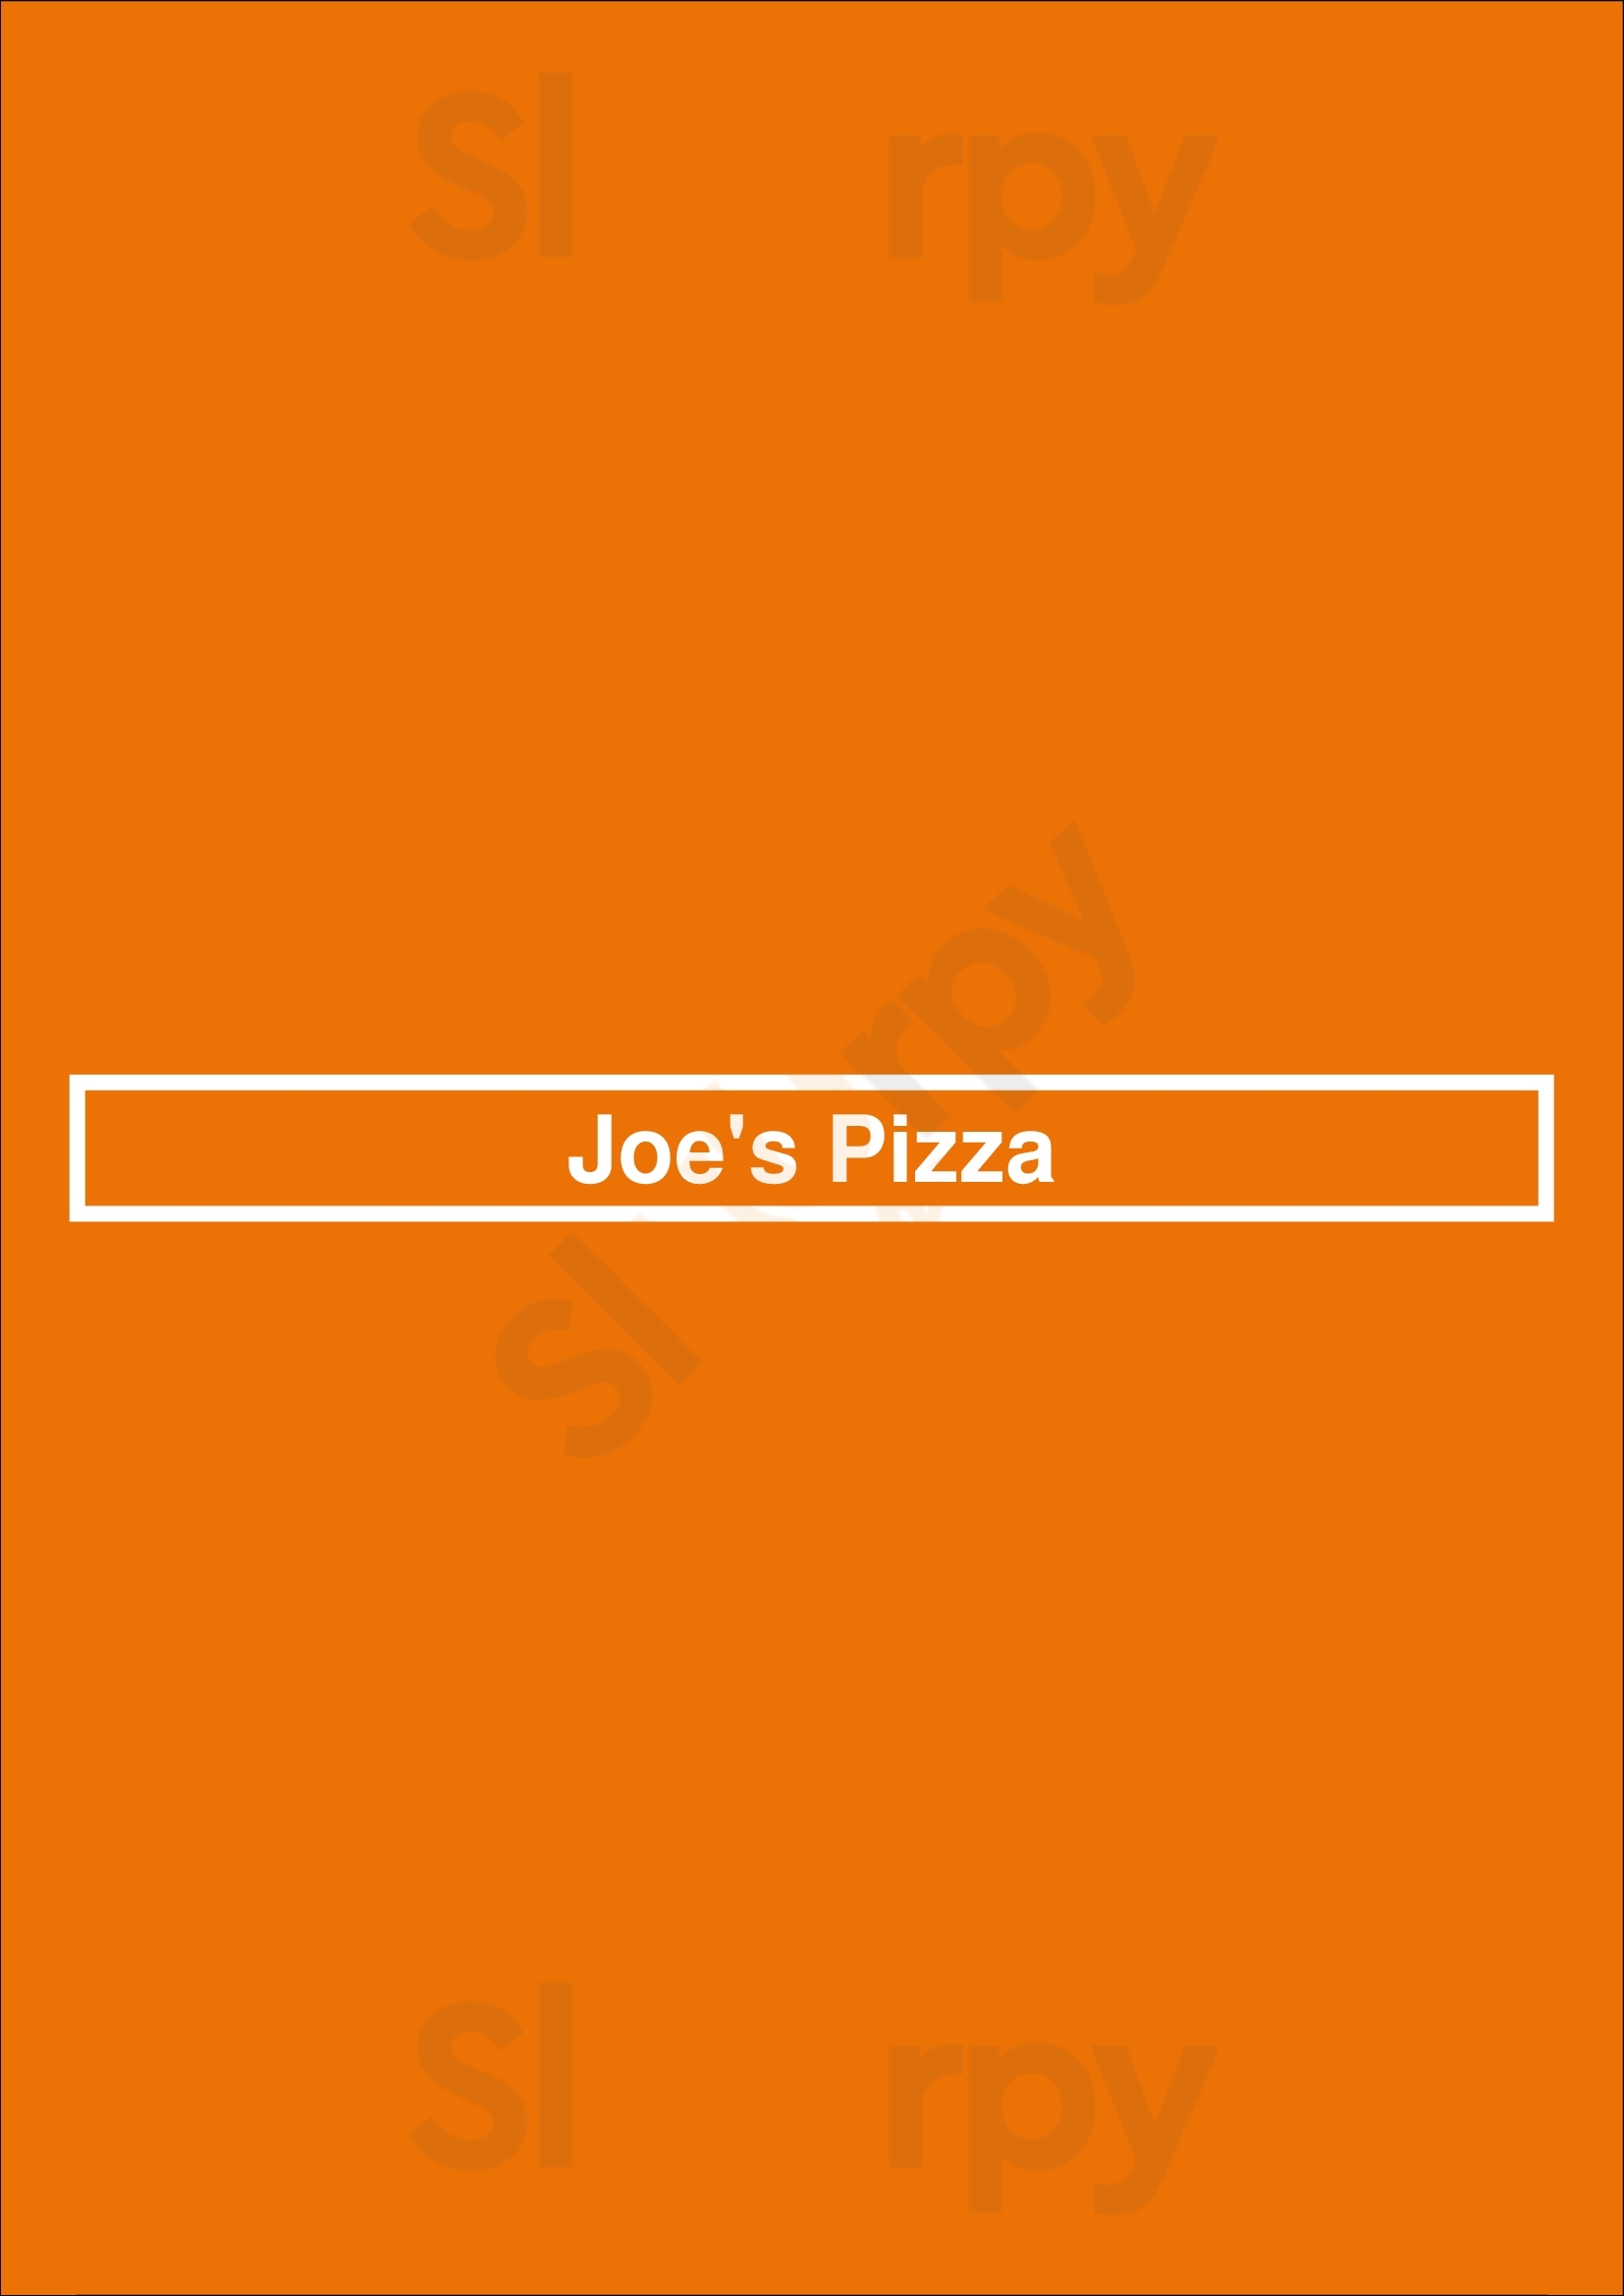 Joe's Pizza Los Angeles Menu - 1